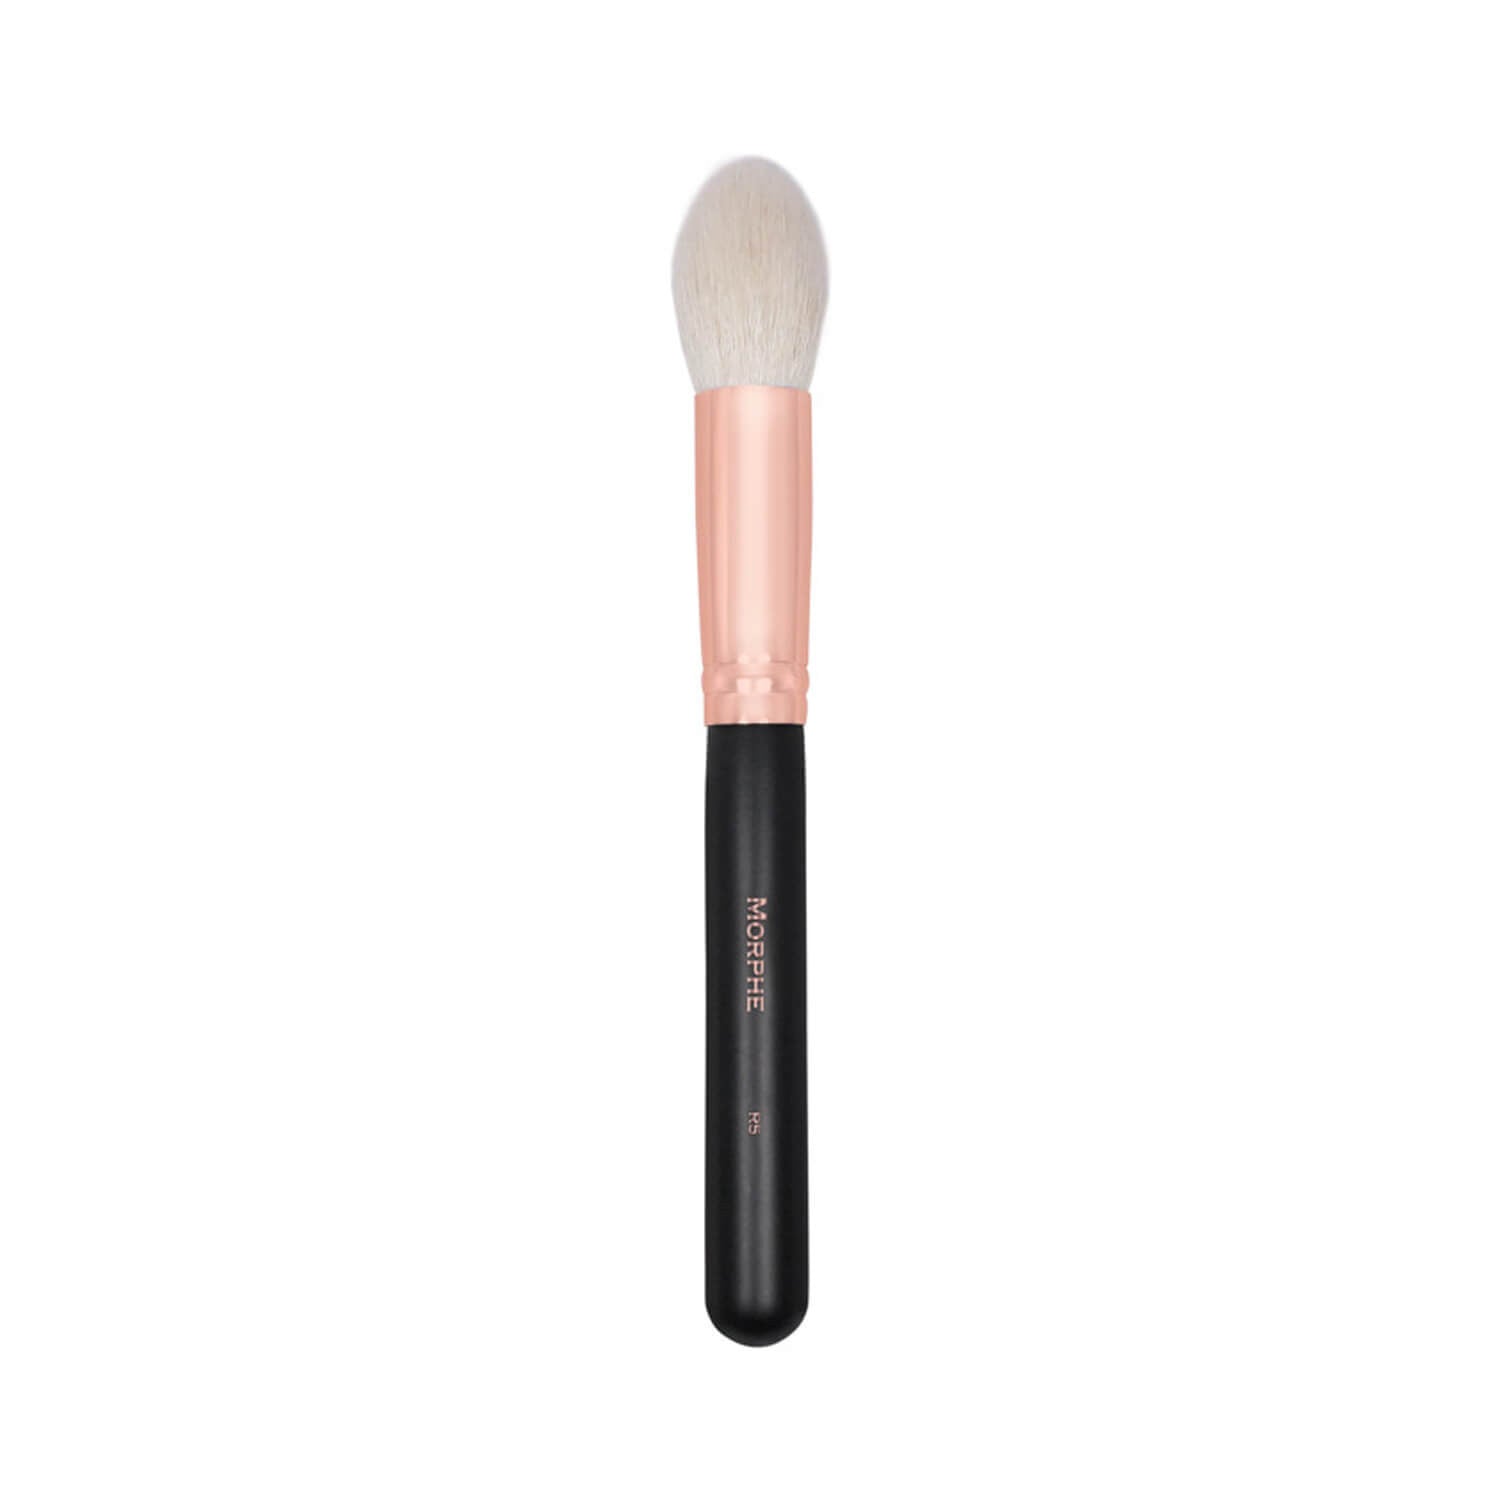 Morphe Cosmetics R5 Pro Pointed Contour Brush